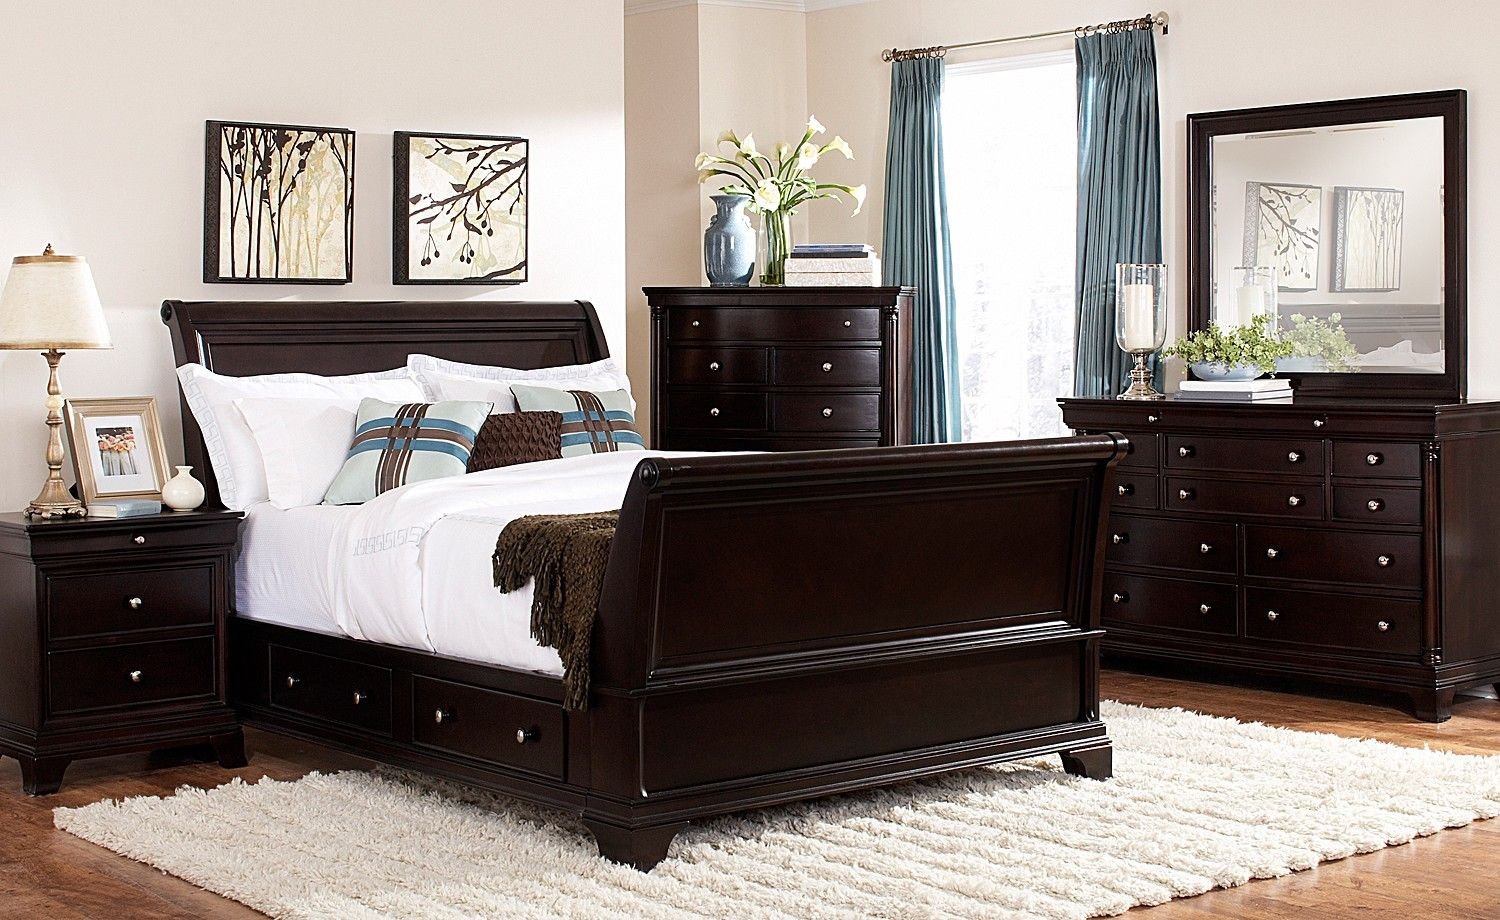 broyhill bedroom furniture model 4163